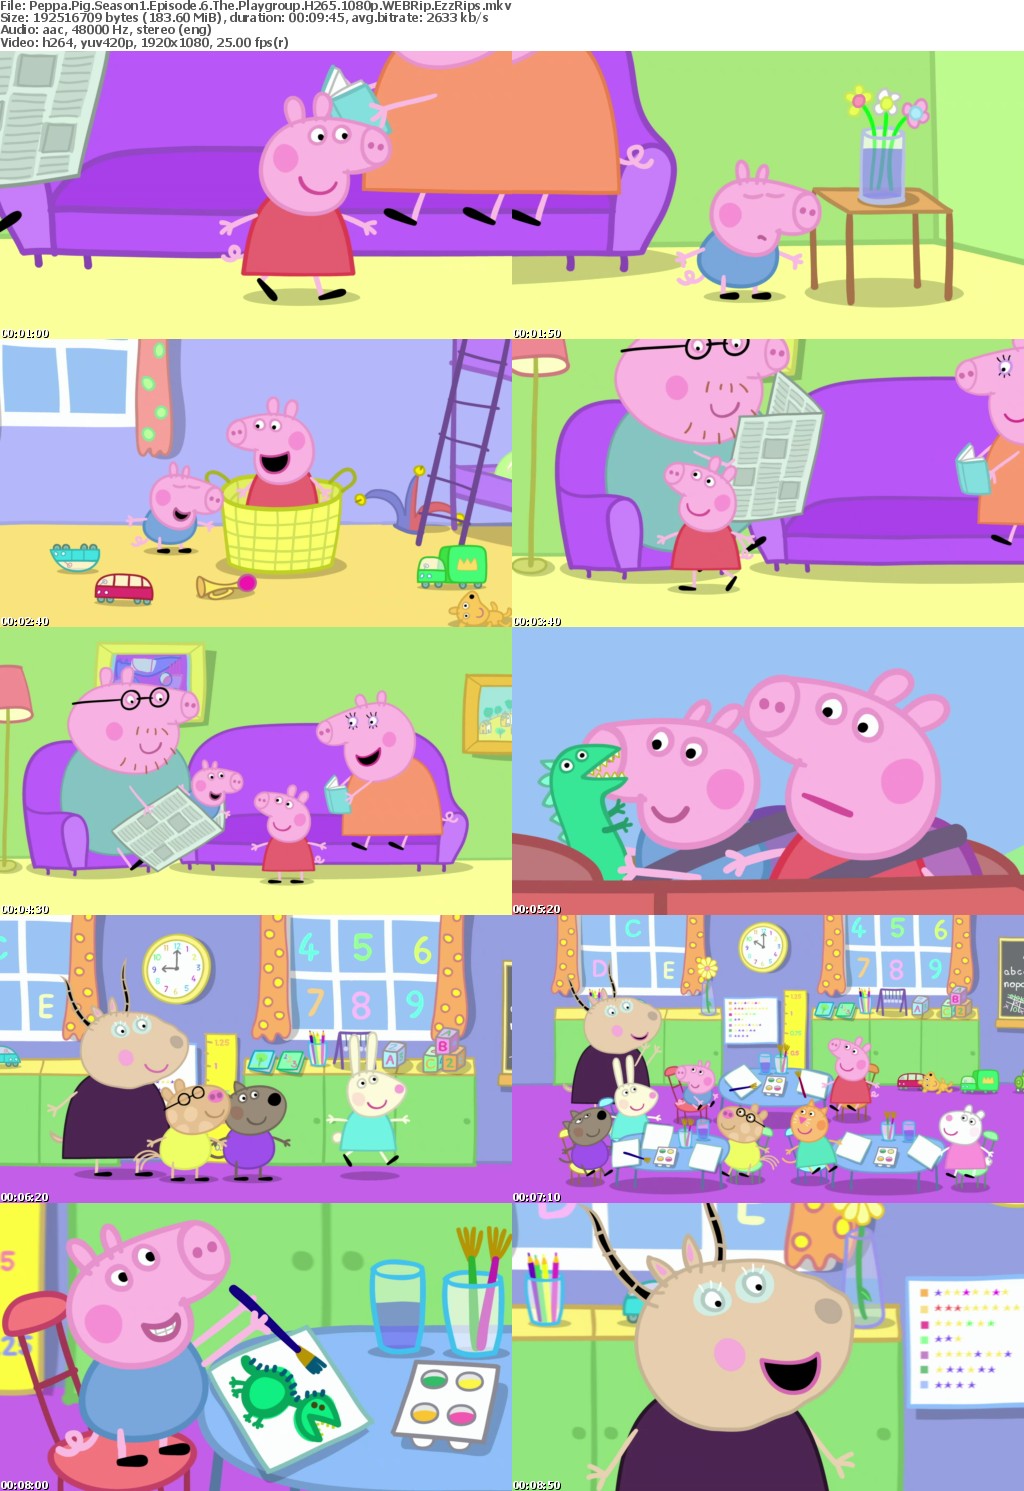 Peppa Pig Season 1 Episode 6 The Playgroup H265 1080p WEBRip EzzRips